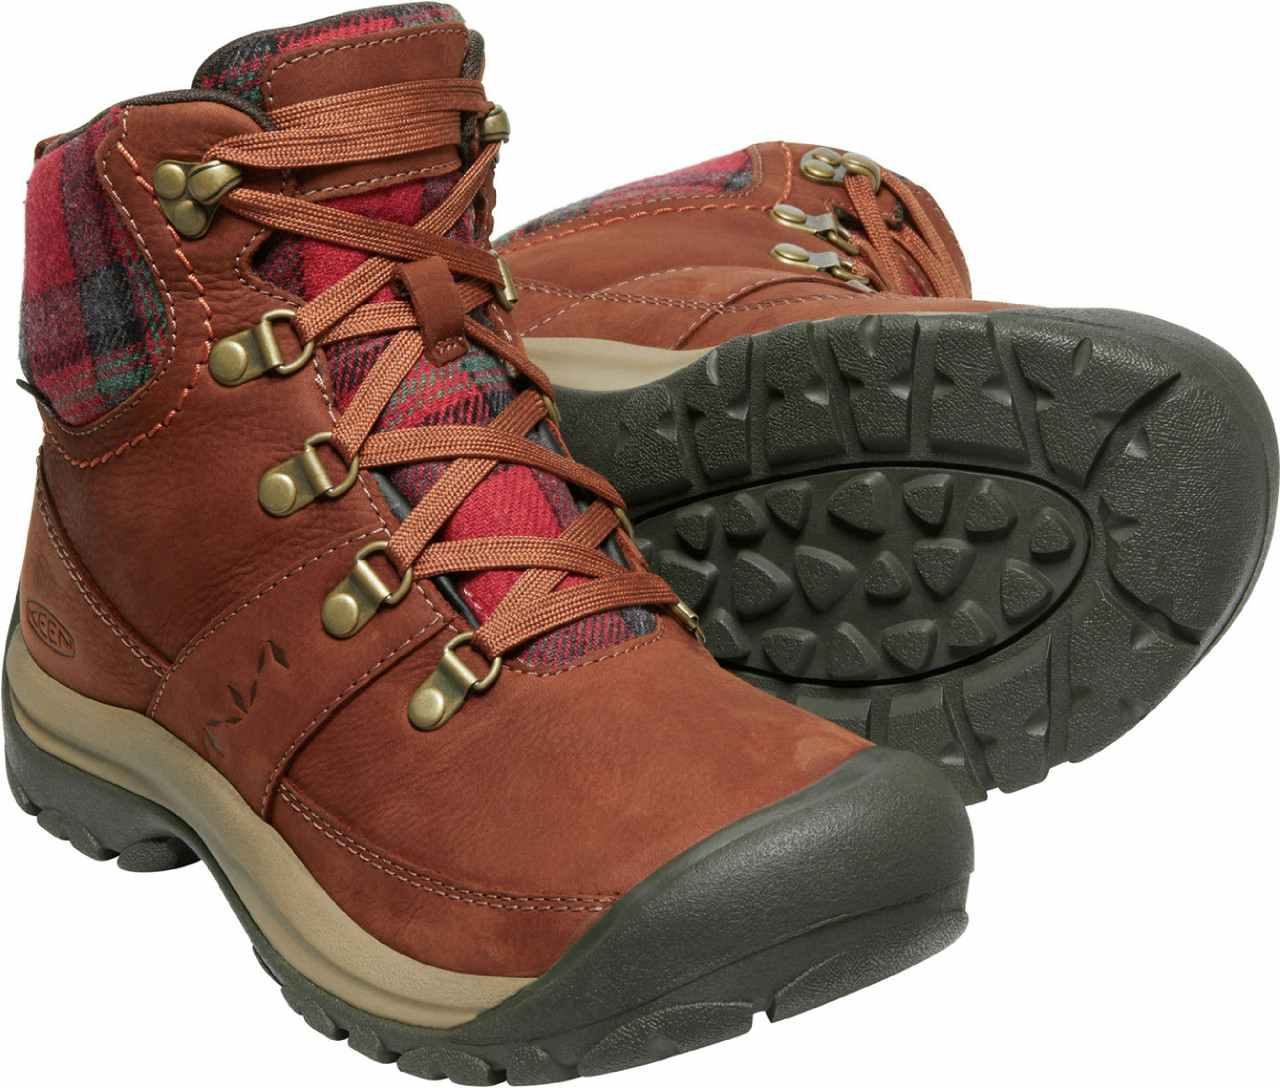 Kaci III Mid Waterproof Winter Boots Tortoise Shell/Red Plaid